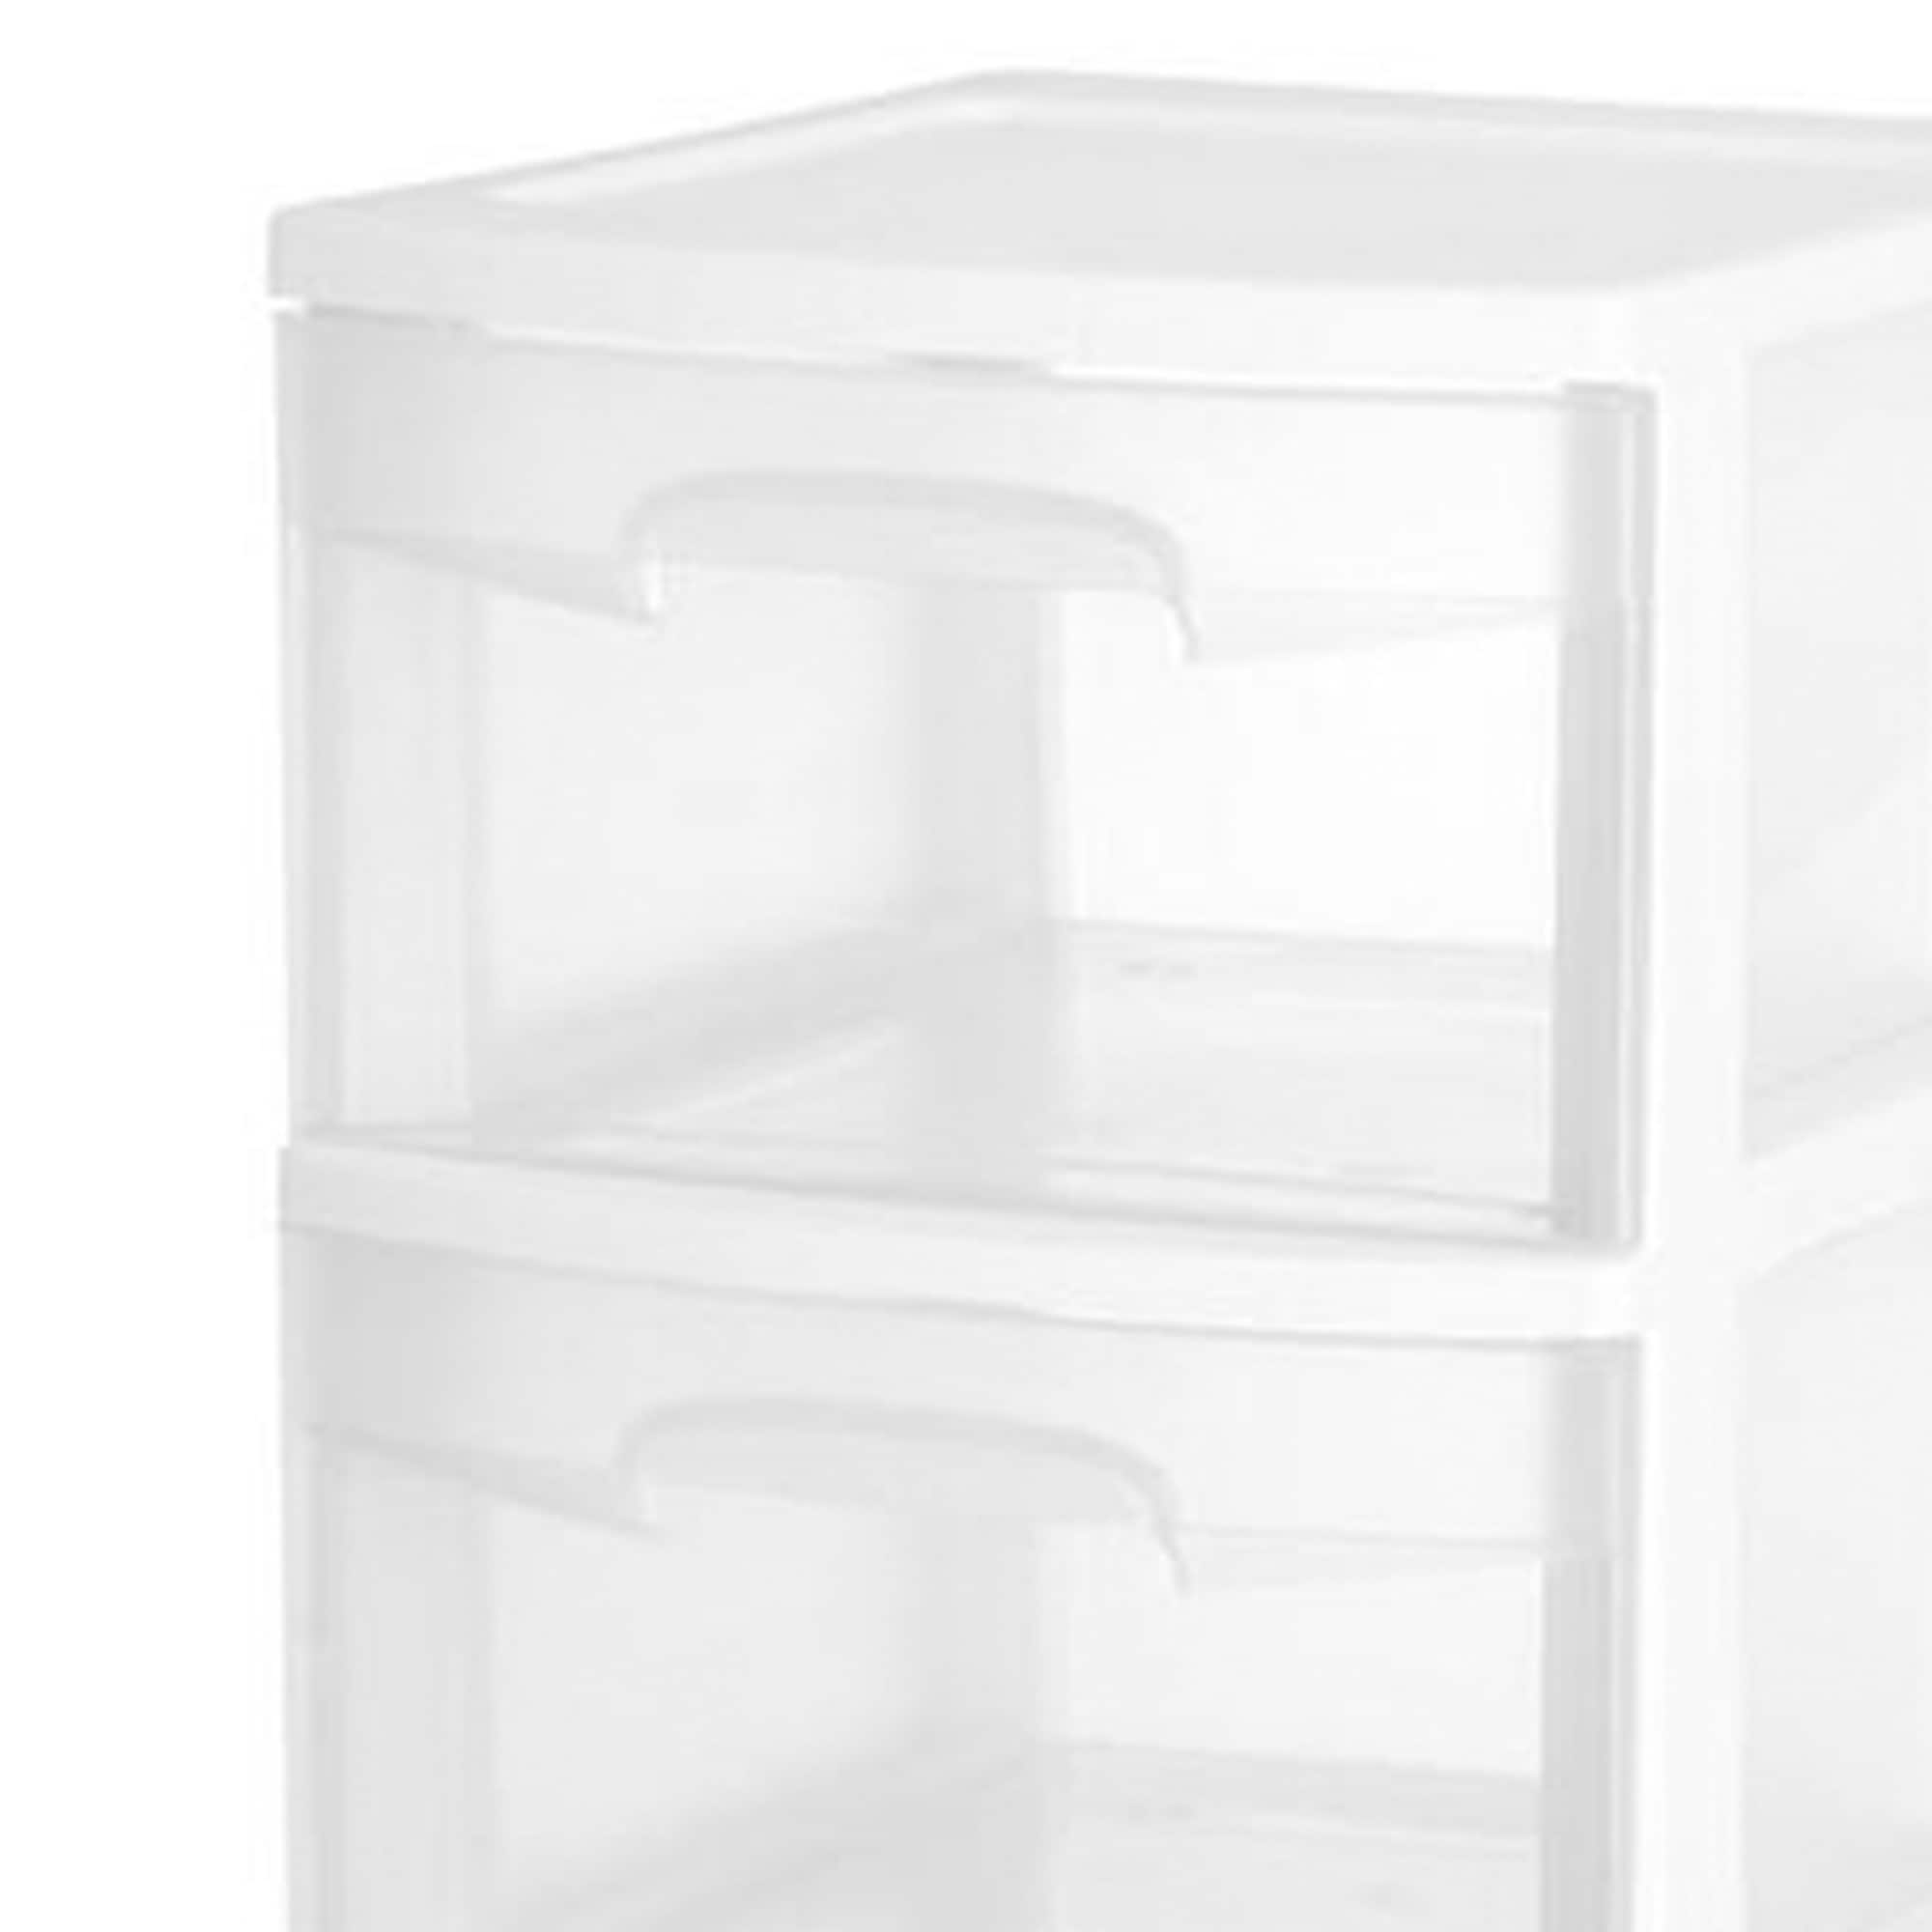 Starplast 3-Drawer Medium Plastic Storage Cart - White - Shop